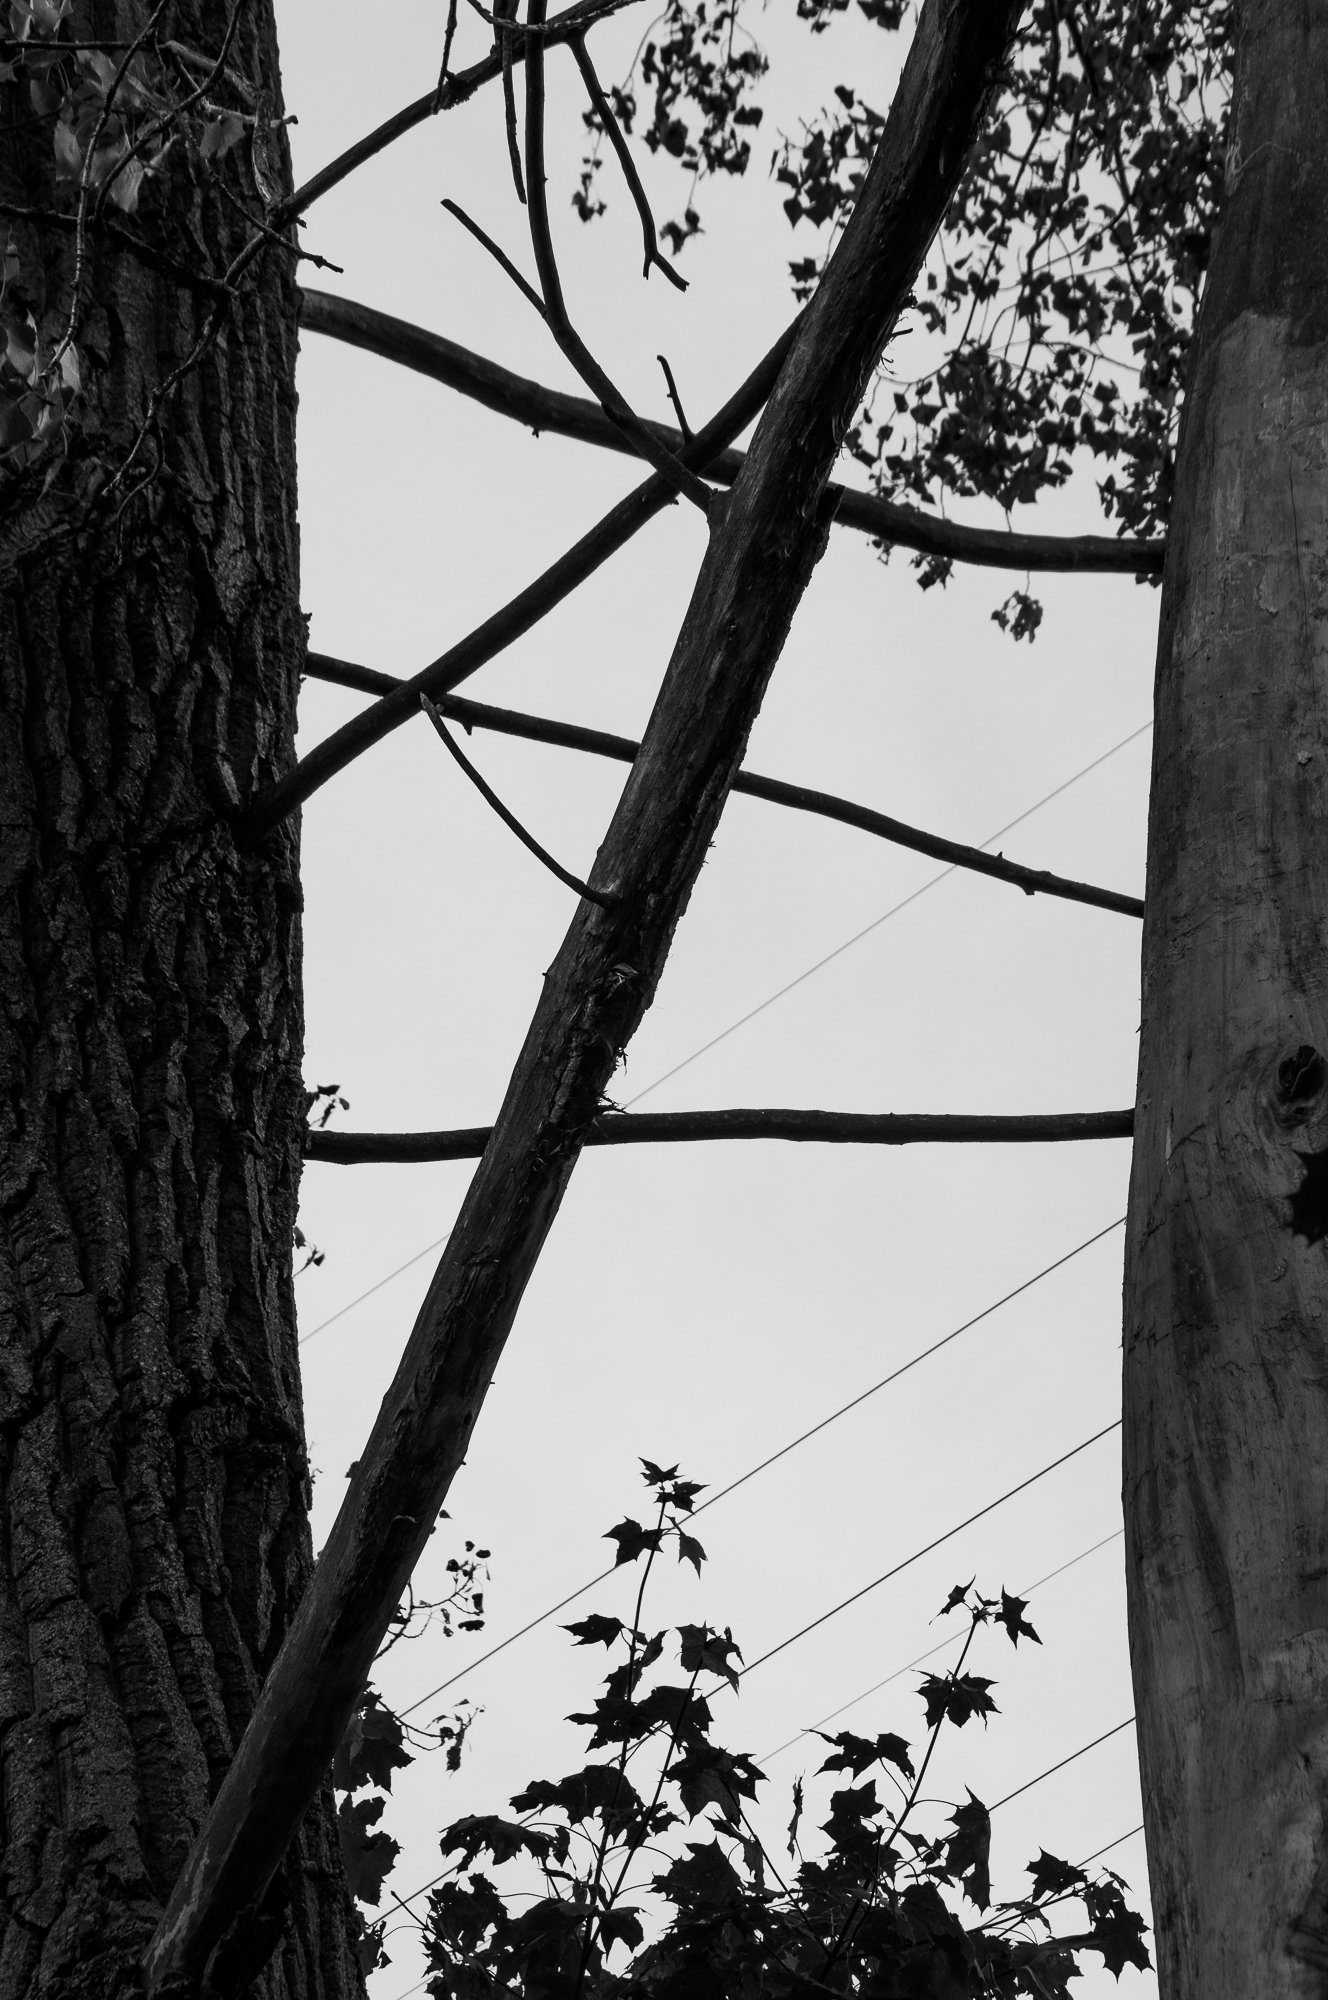 Adam Mazek Photography Warsaw (Warszawa) 2019. Post: "Stanley Kubrick." Minimalism. Trees.